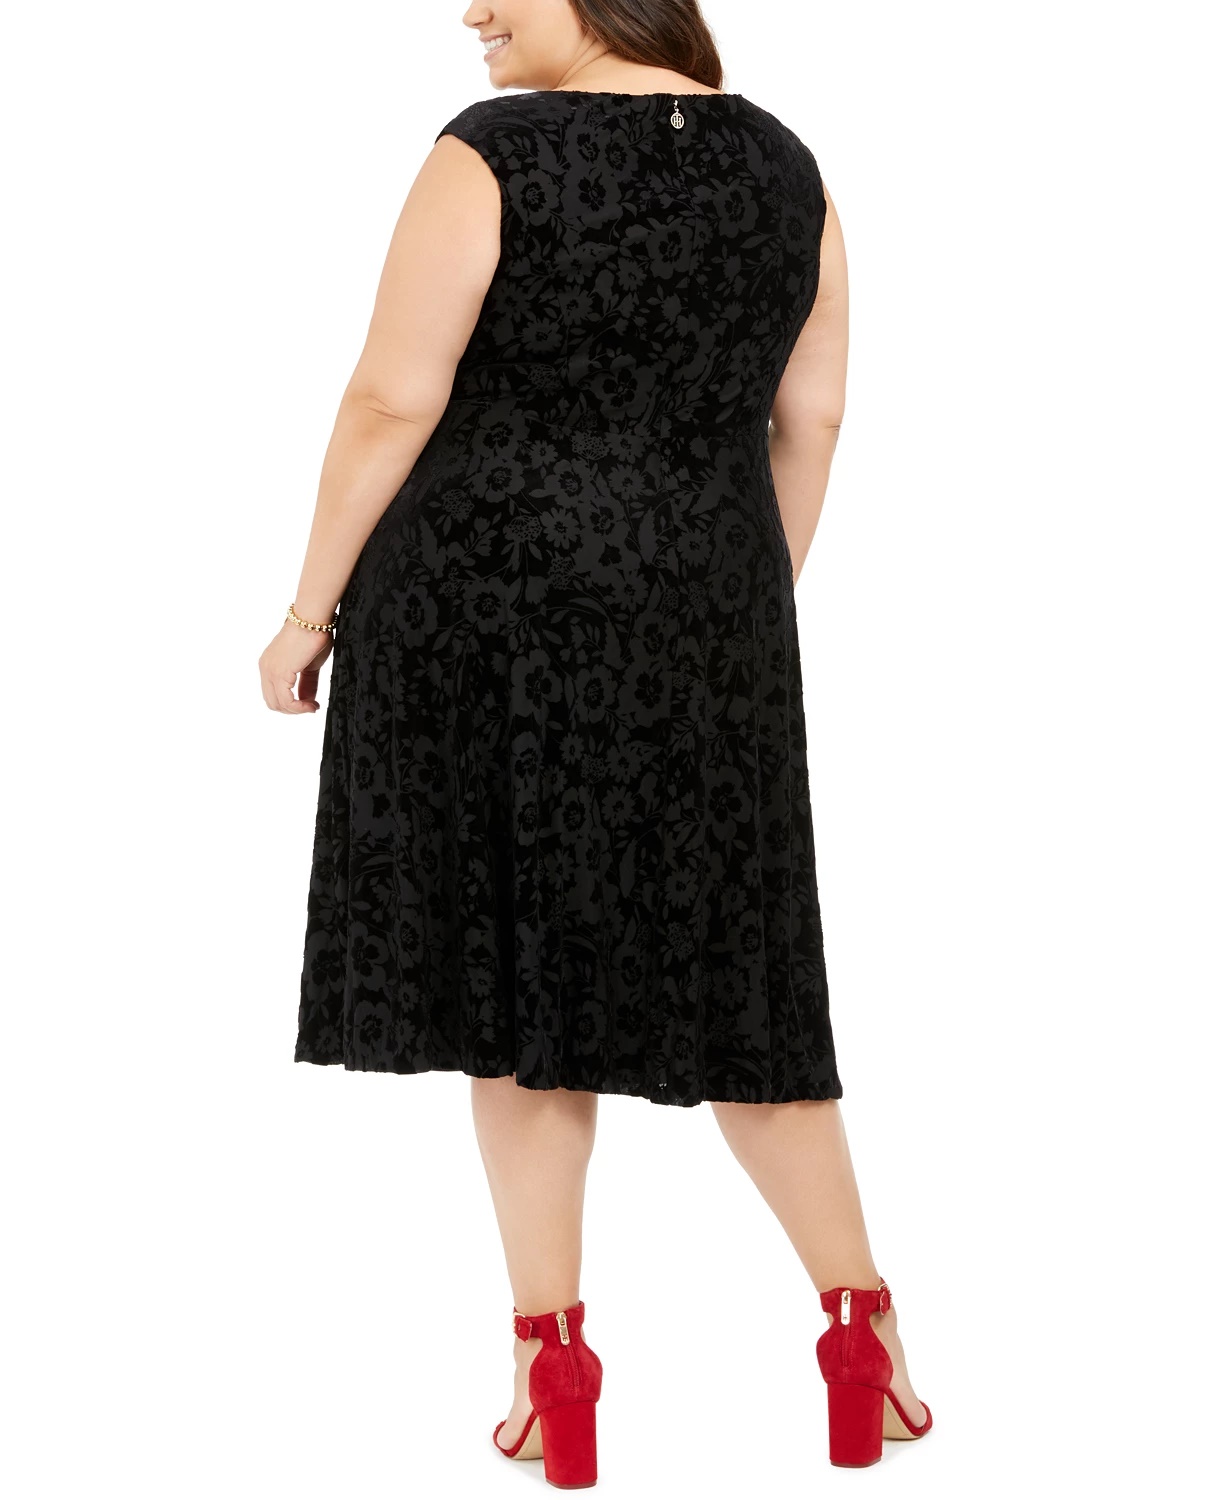 huiselijk dek zadel Tommy Hilfiger Women's Velvet Floral Midi Fit Flare Evening Dress Black  Size 18W